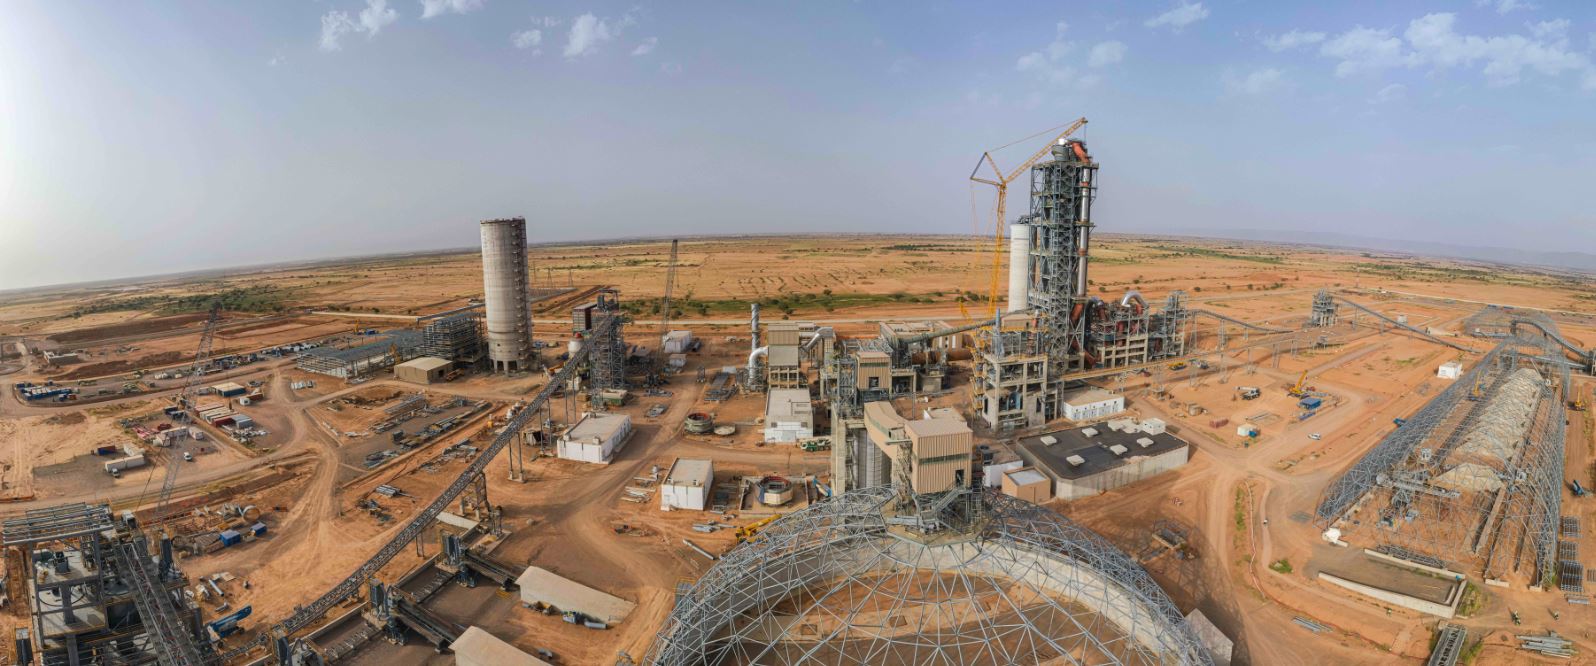 LafargeHolcim unveils new cement plant in Taroudant